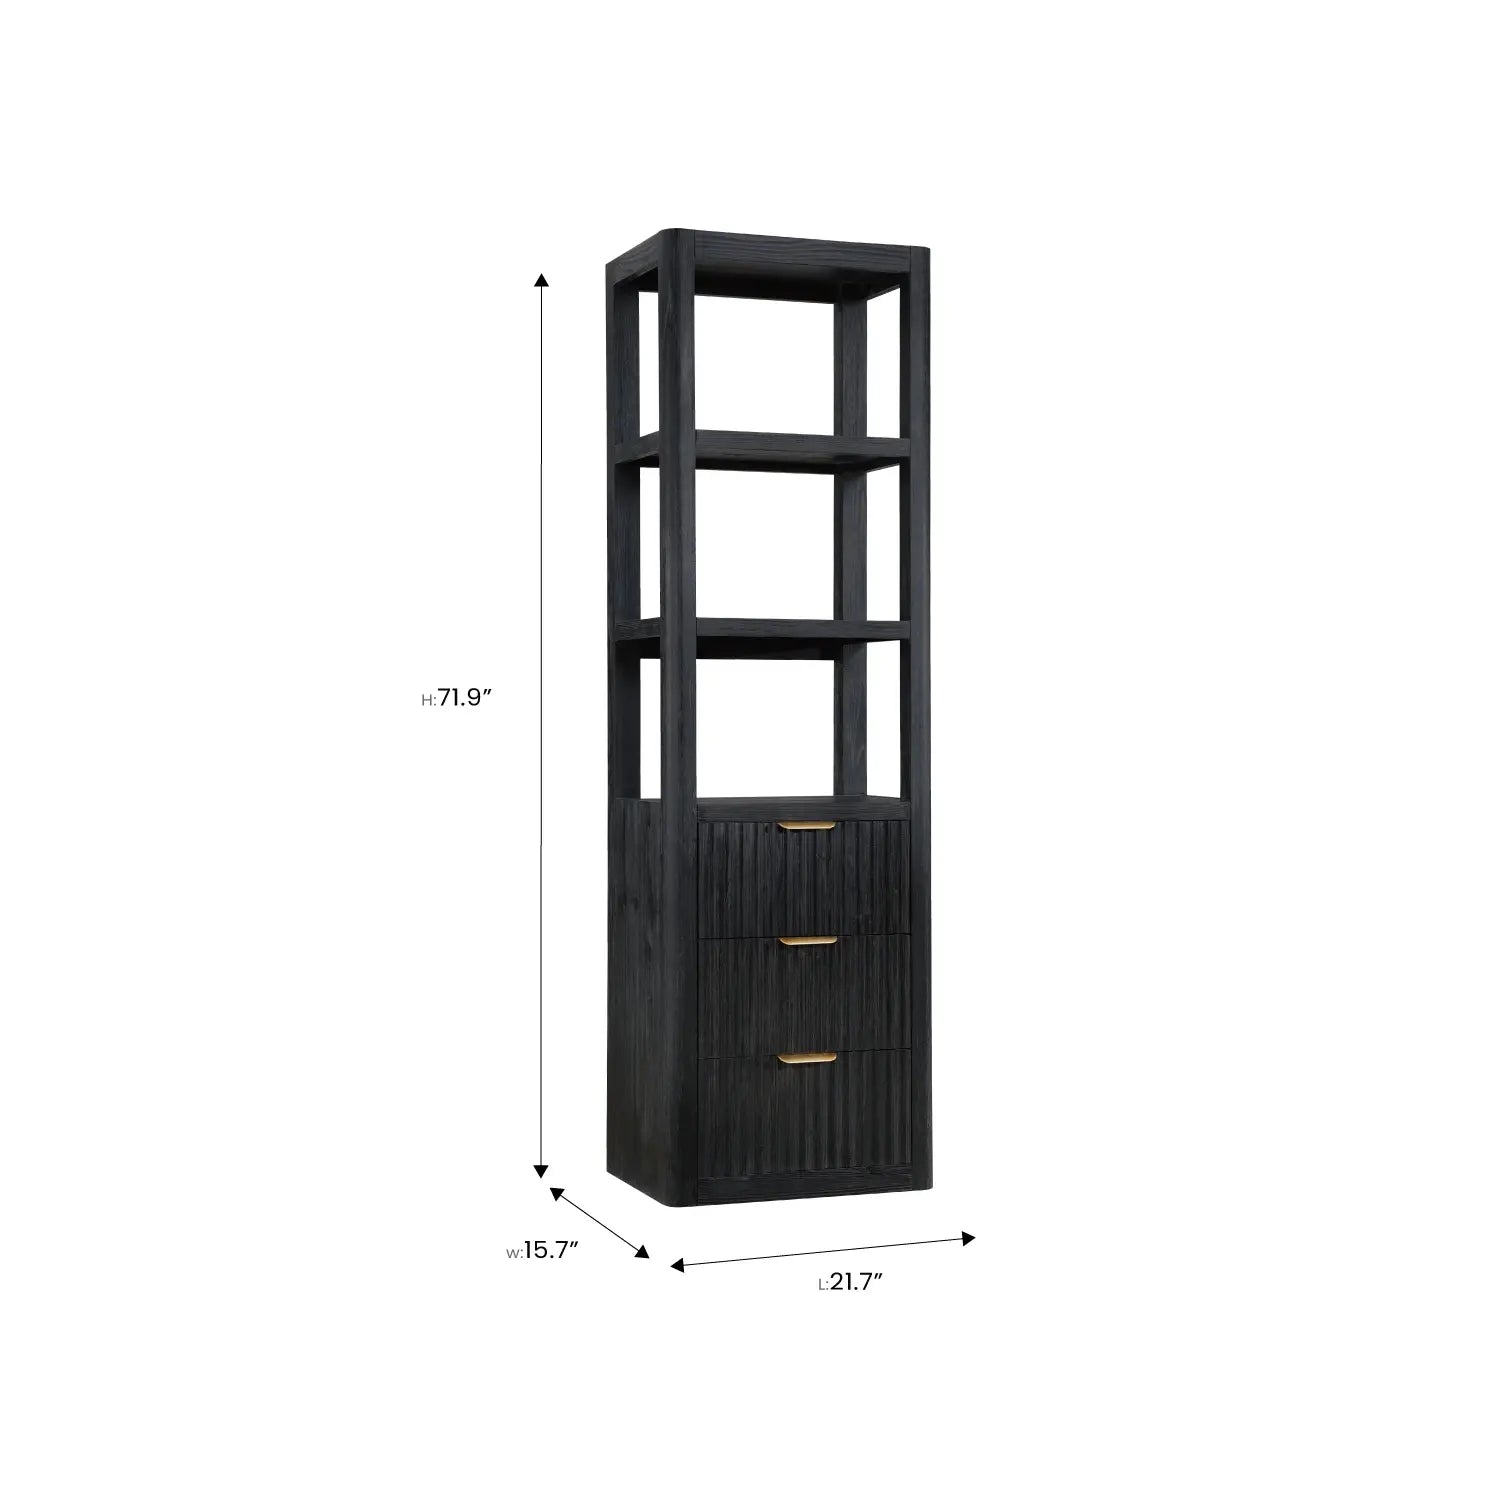 
  
  Vinnova Cádiz 22" Storage Cabinet in Fir Wood with 3 Drawers 3 Shelves for Bathroom and Living Room
  
